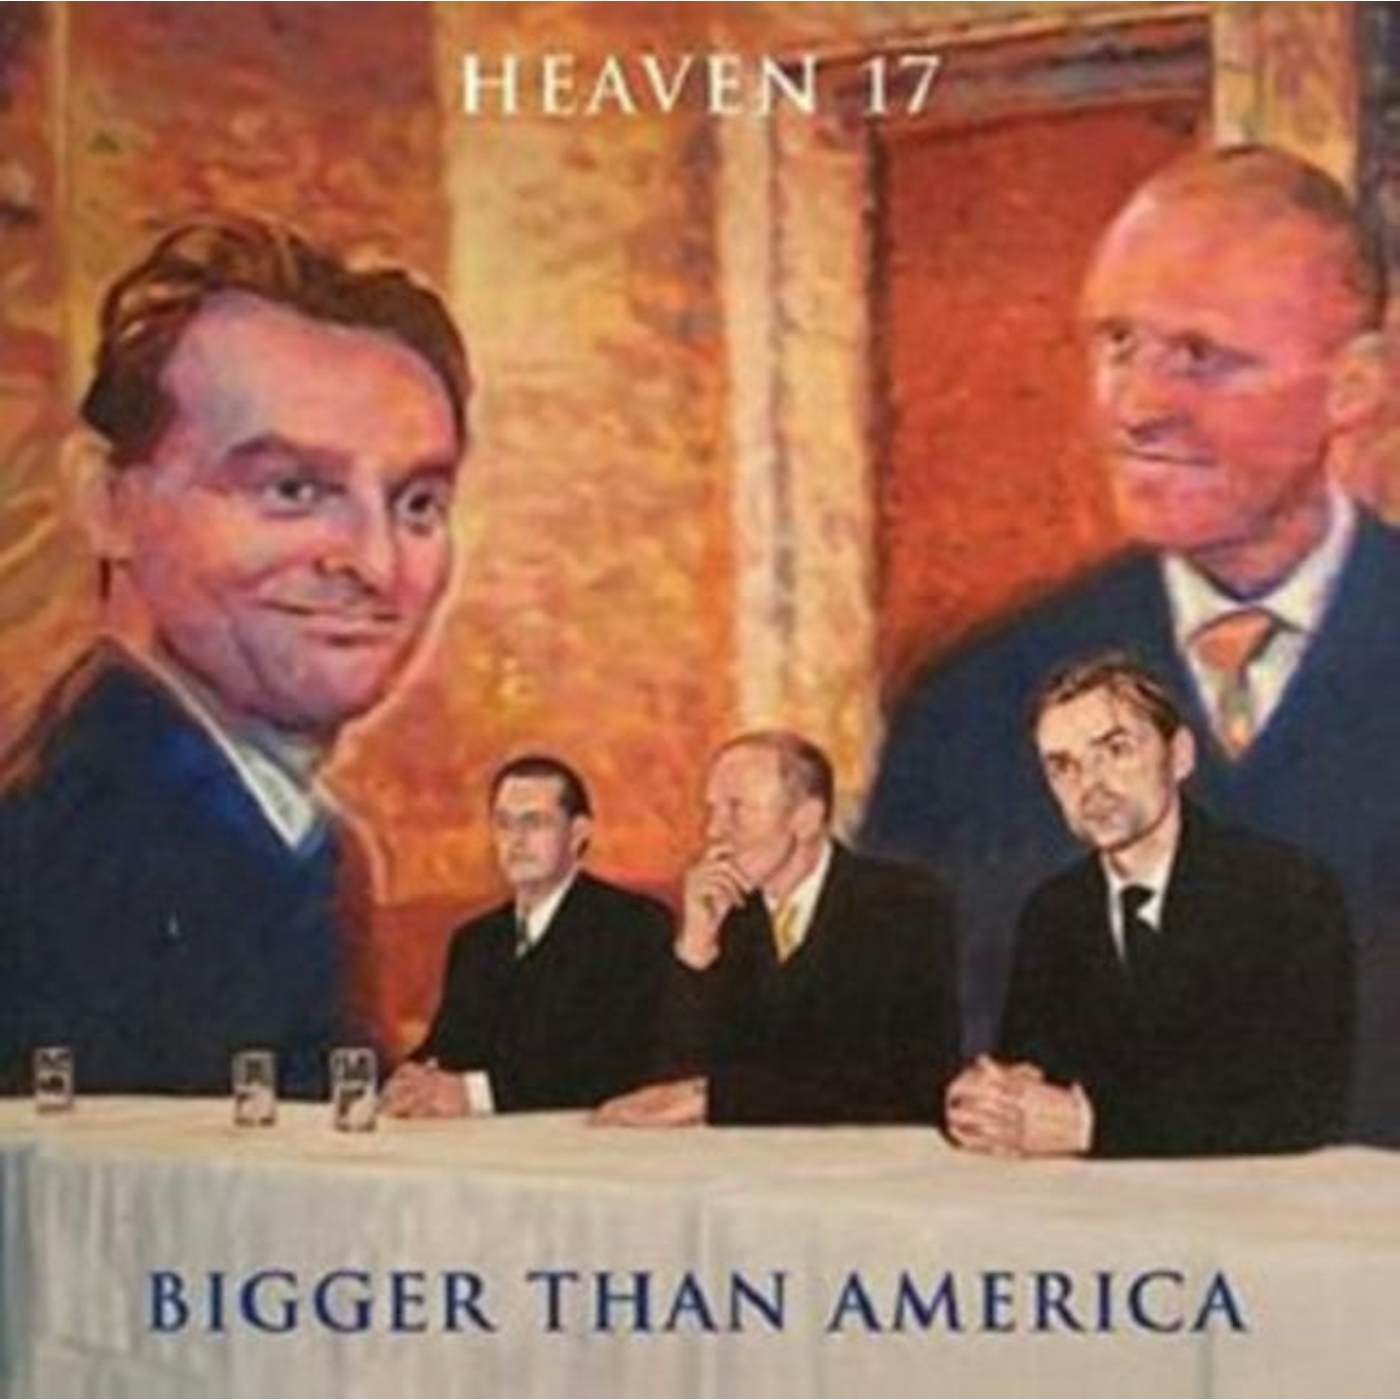 Heaven 17 LP - Bigger Than America (Vinyl)